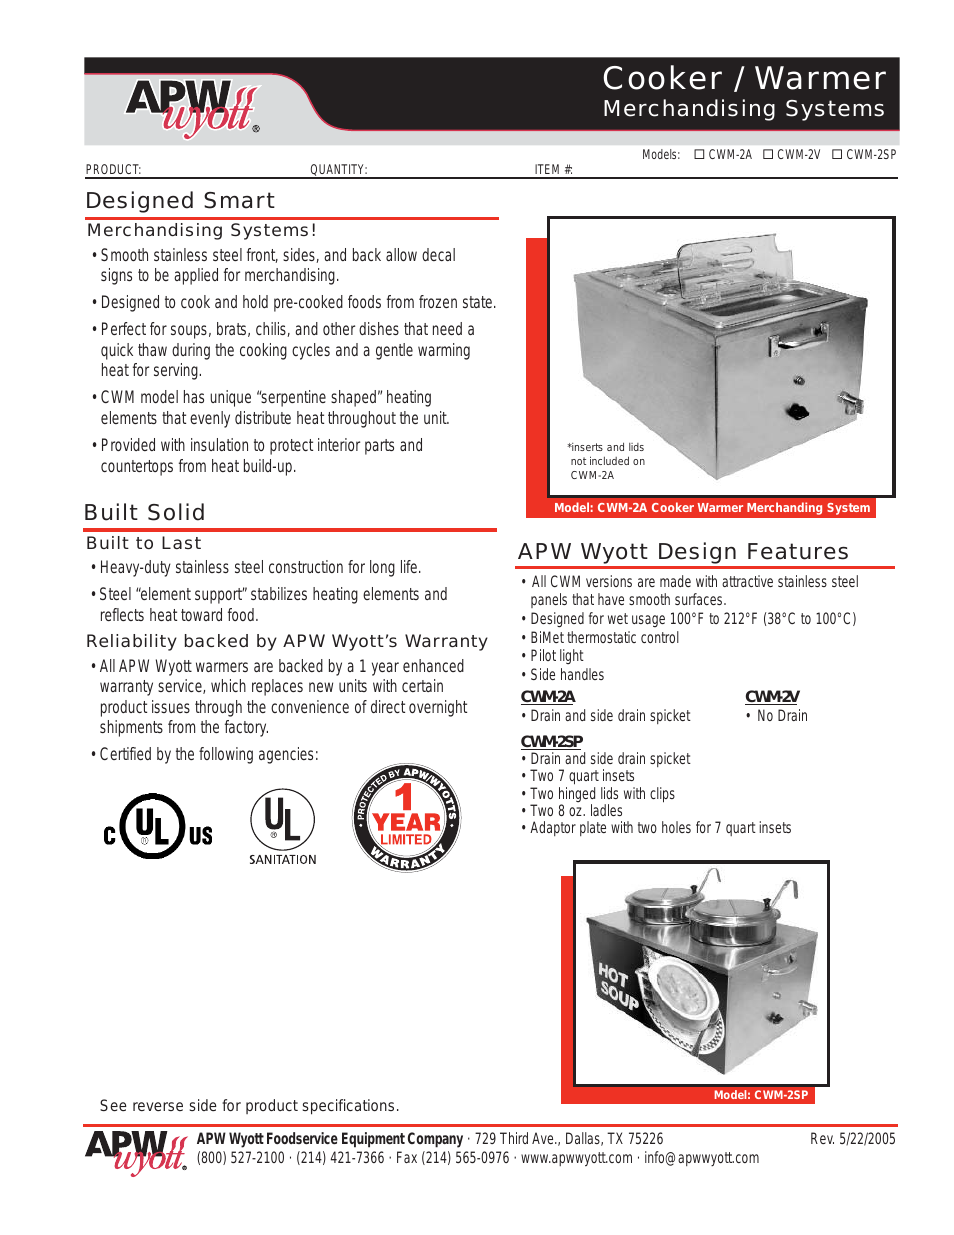 Cooker / Warmer Merchandising Systems CWM-2V